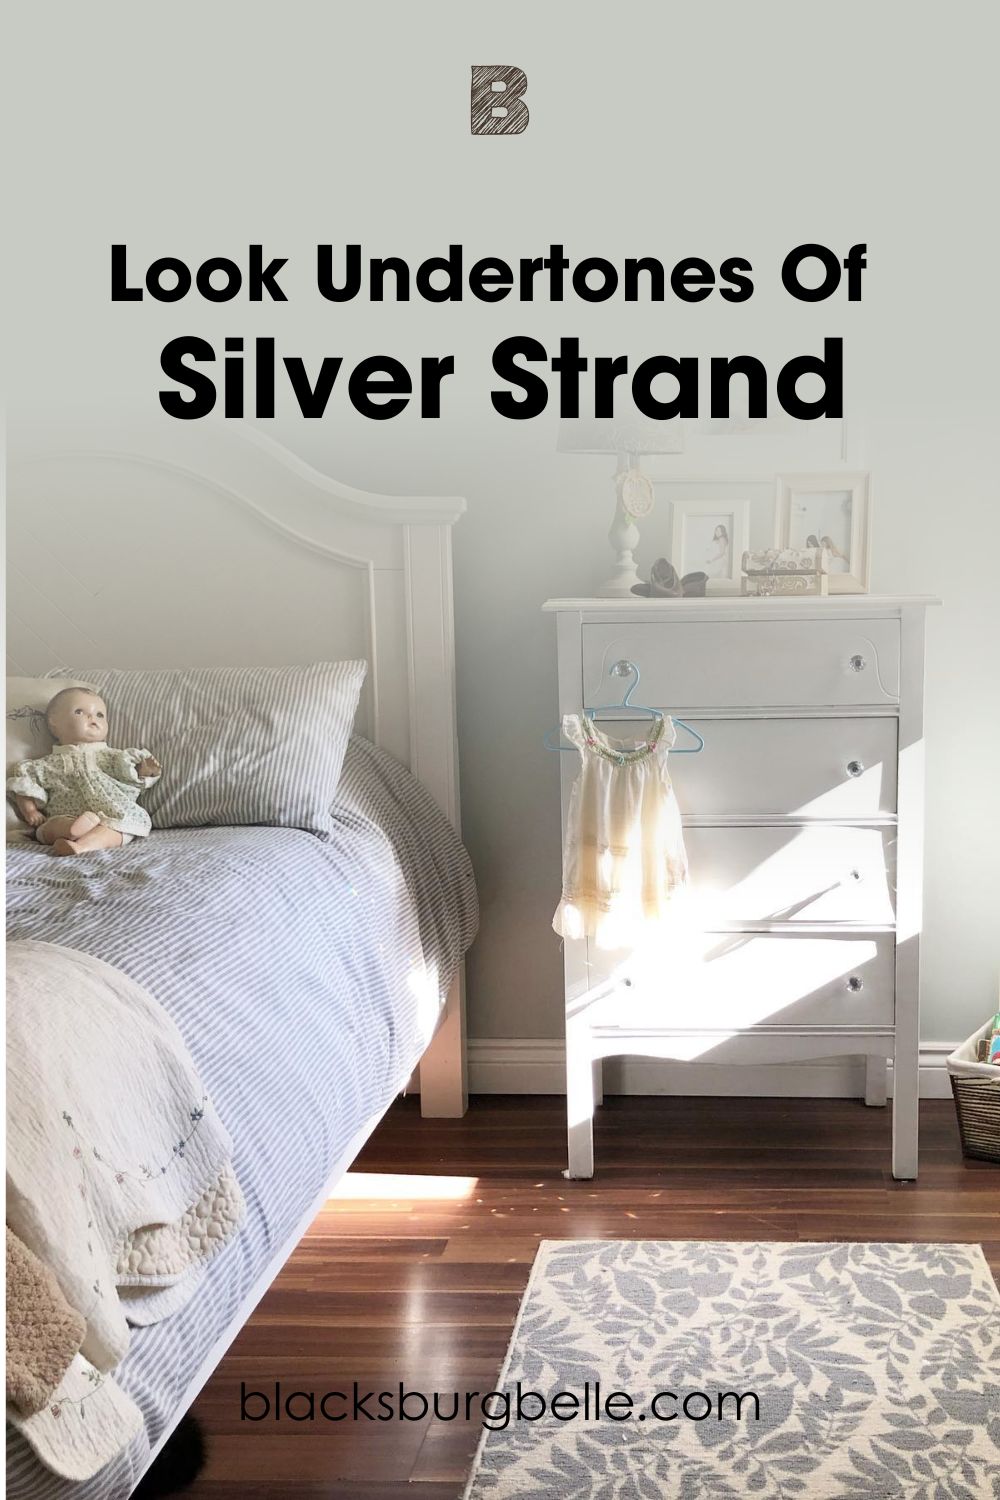 A Closer Look at Silver Strand Undertones